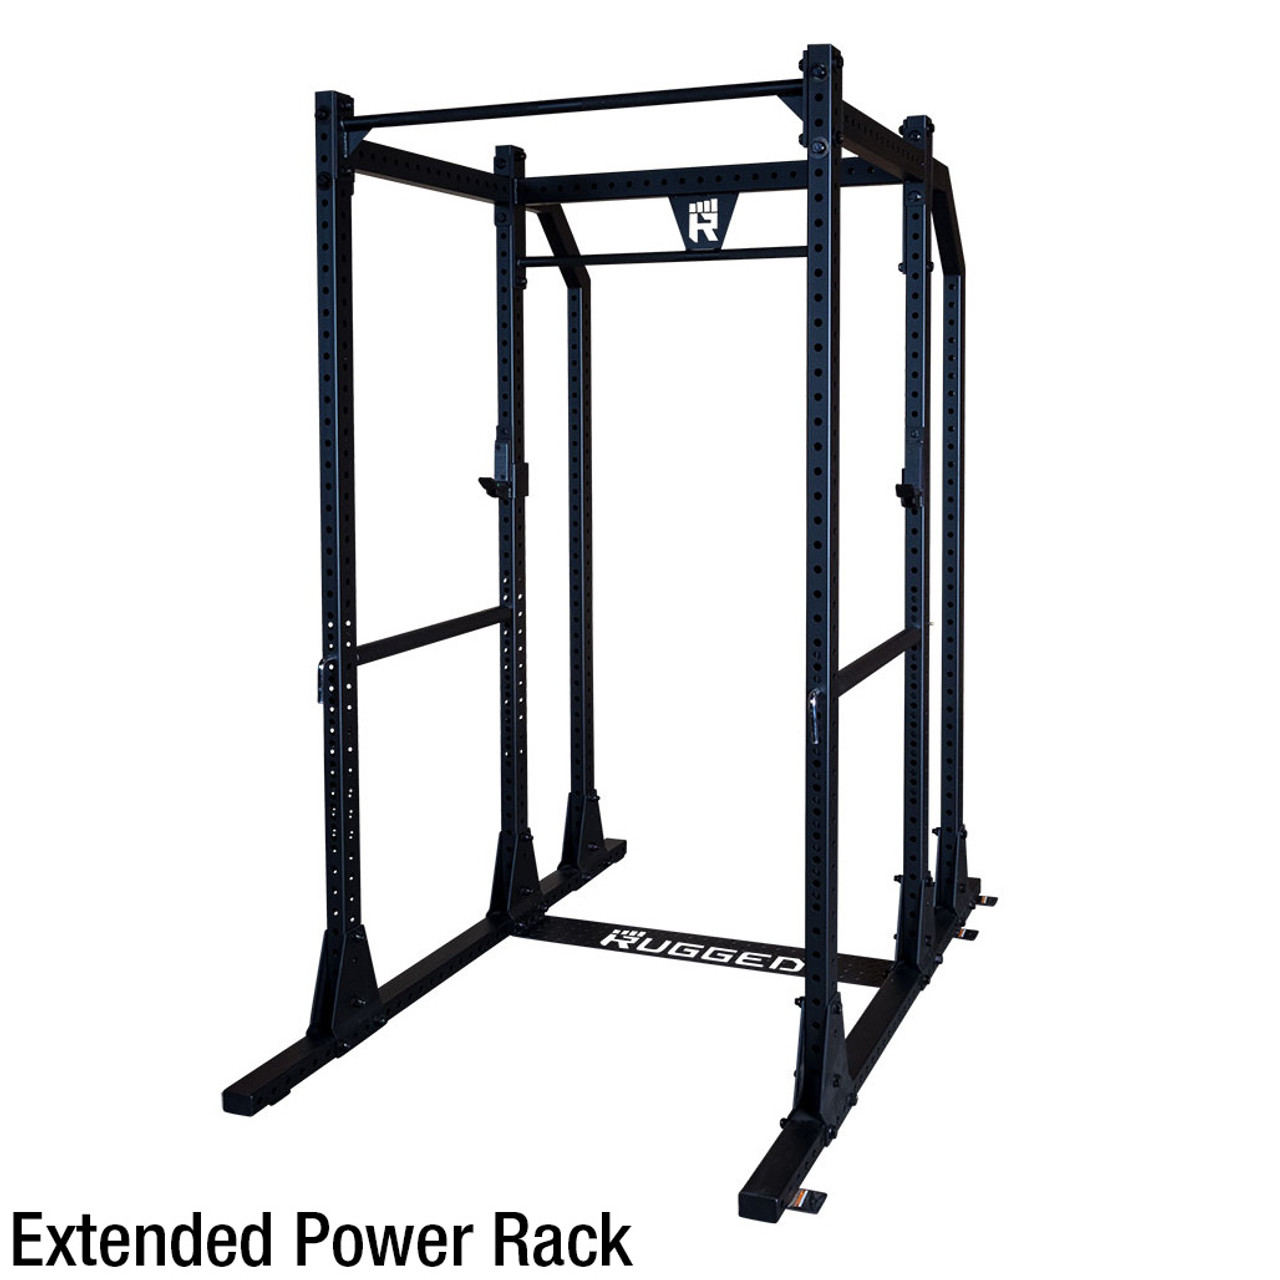 Rugged Fitness Power Rack Y100 - Power Racks